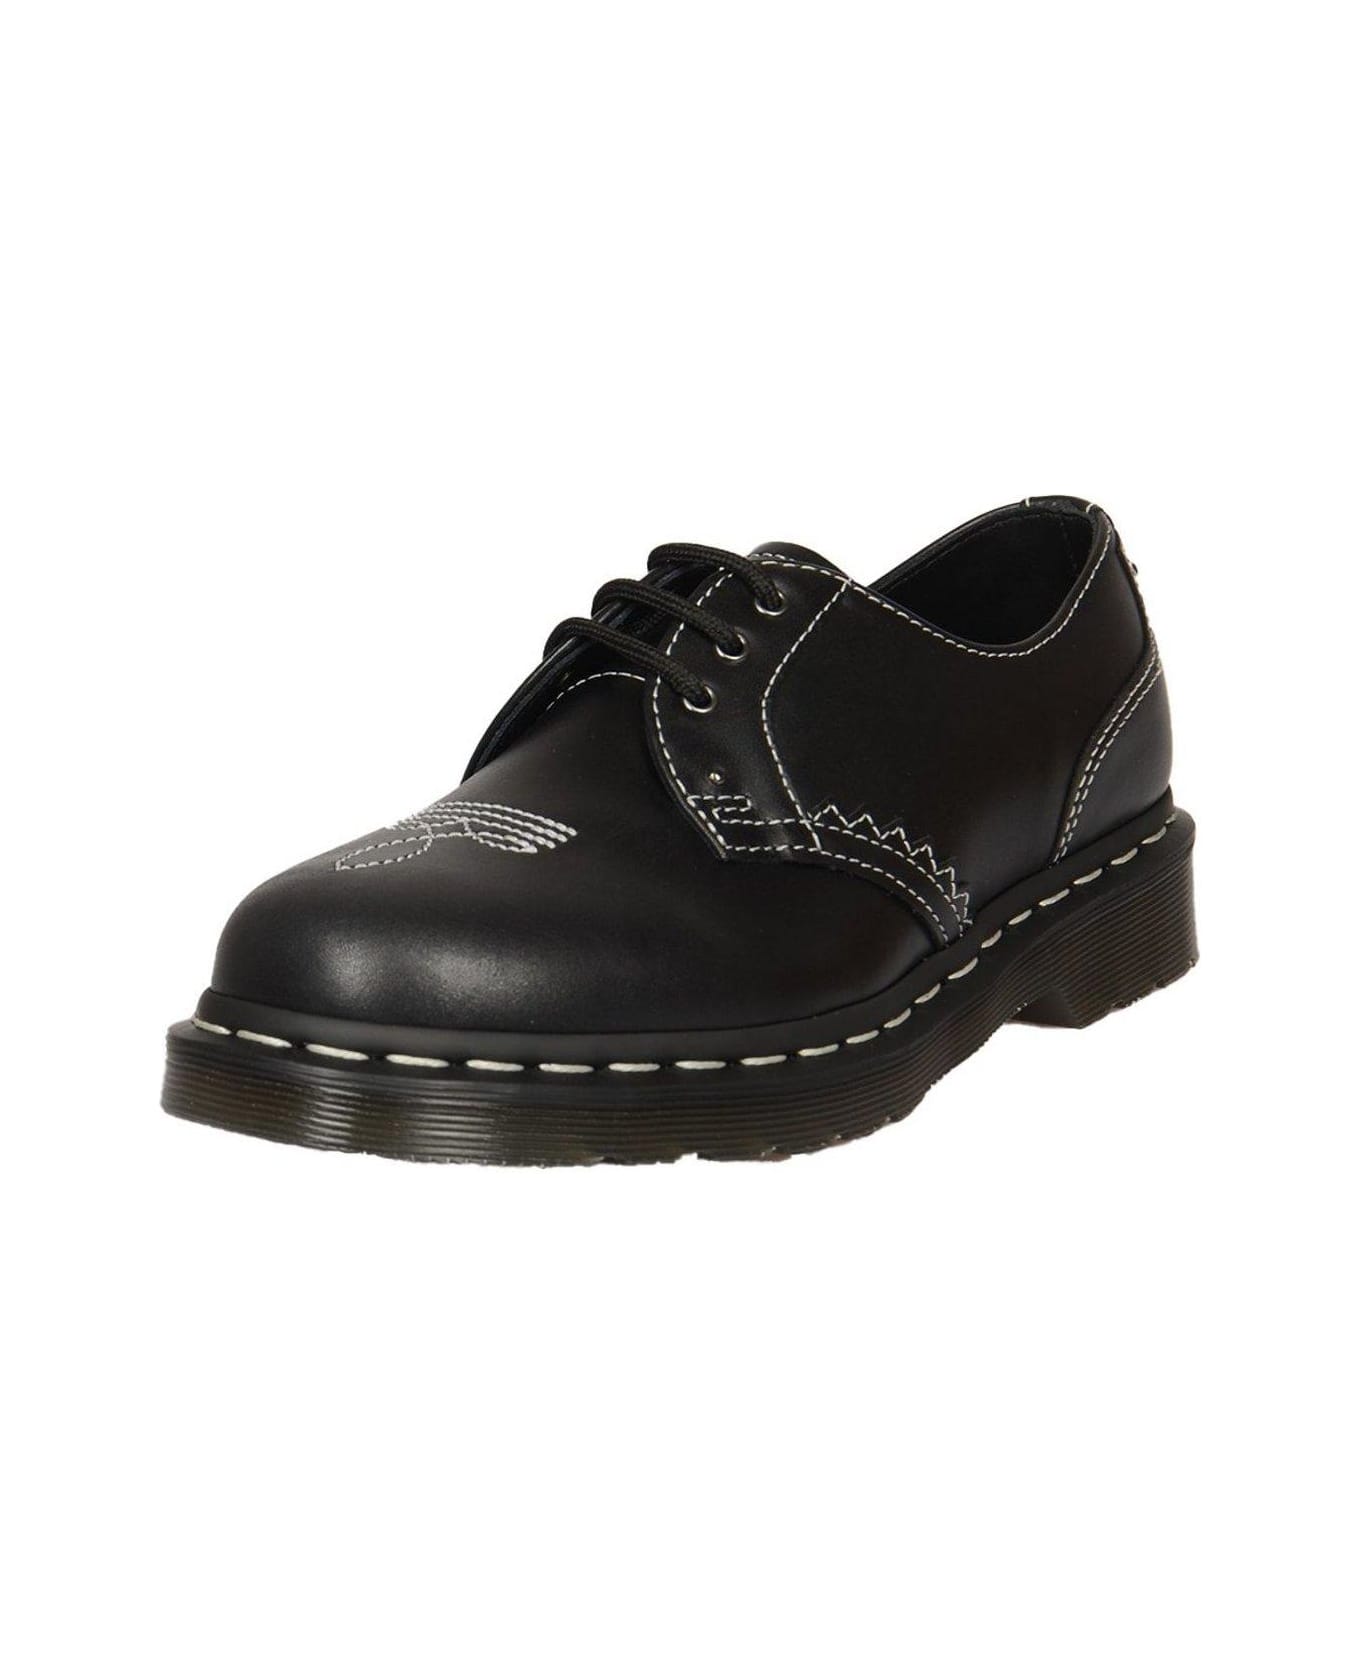 Dr. Martens 1461 Gothic Amerciana Oxford Shoes - Black Wanama